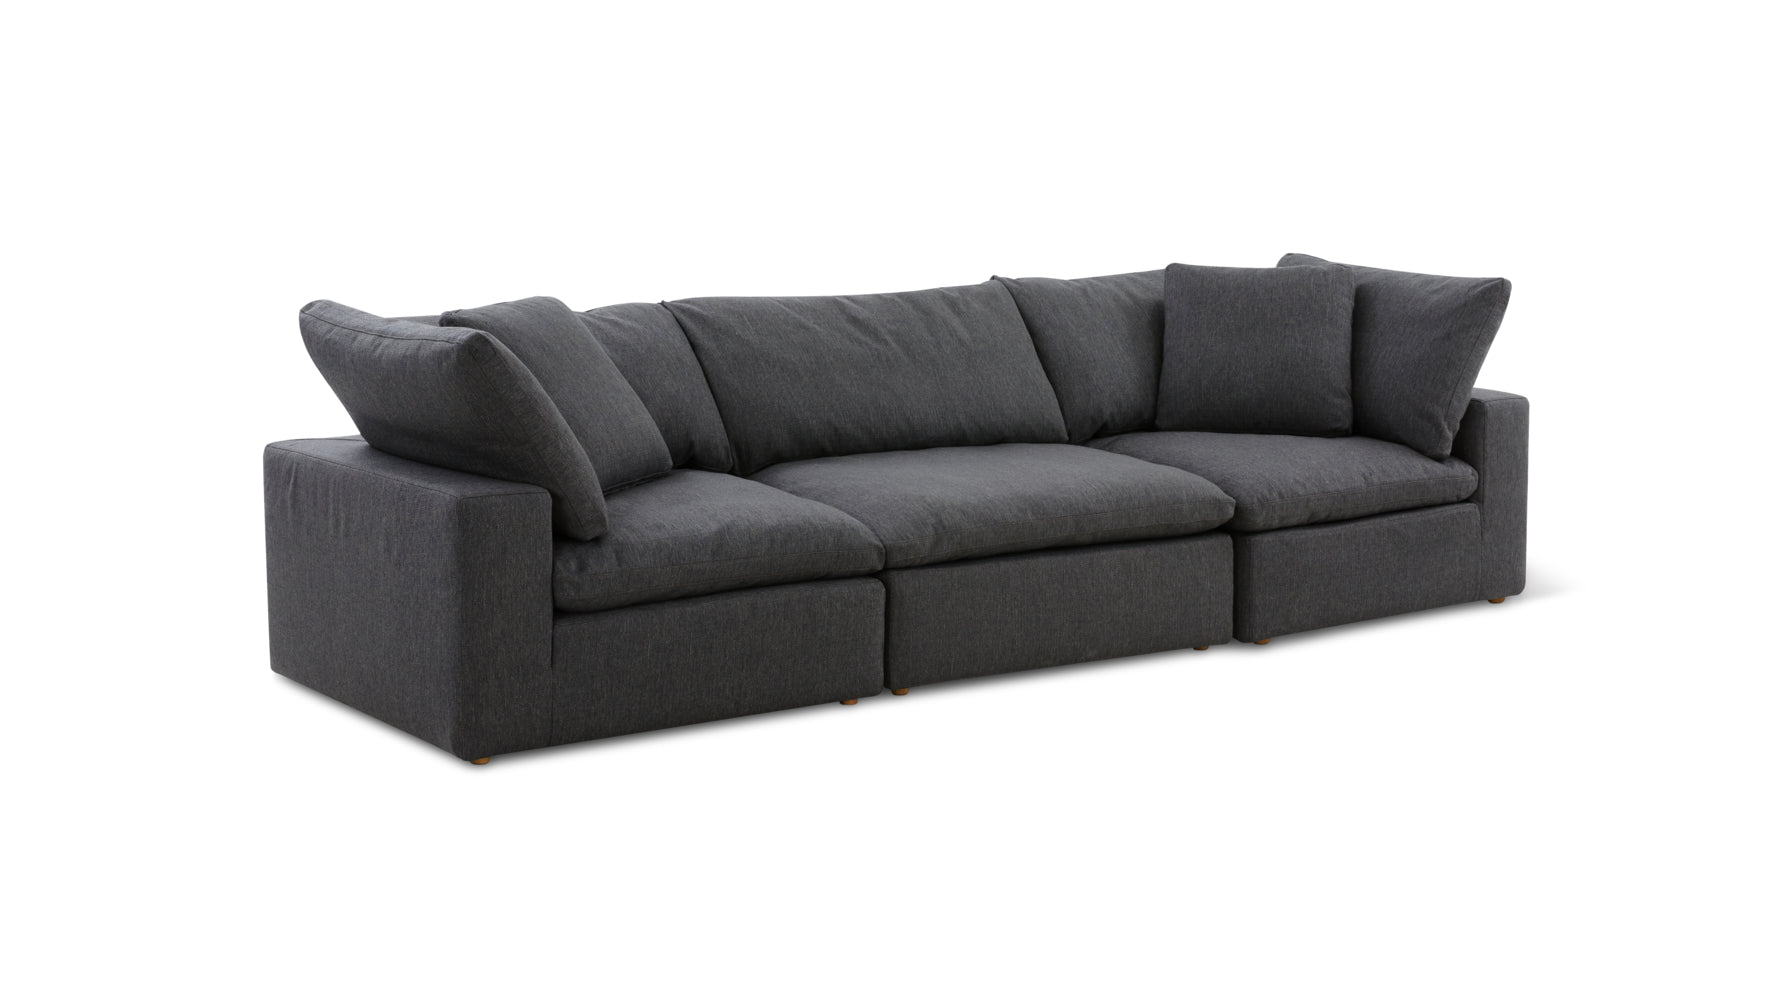 Movie Night™ 3-Piece Modular Sofa, Standard, Dark Shadow - Image 2